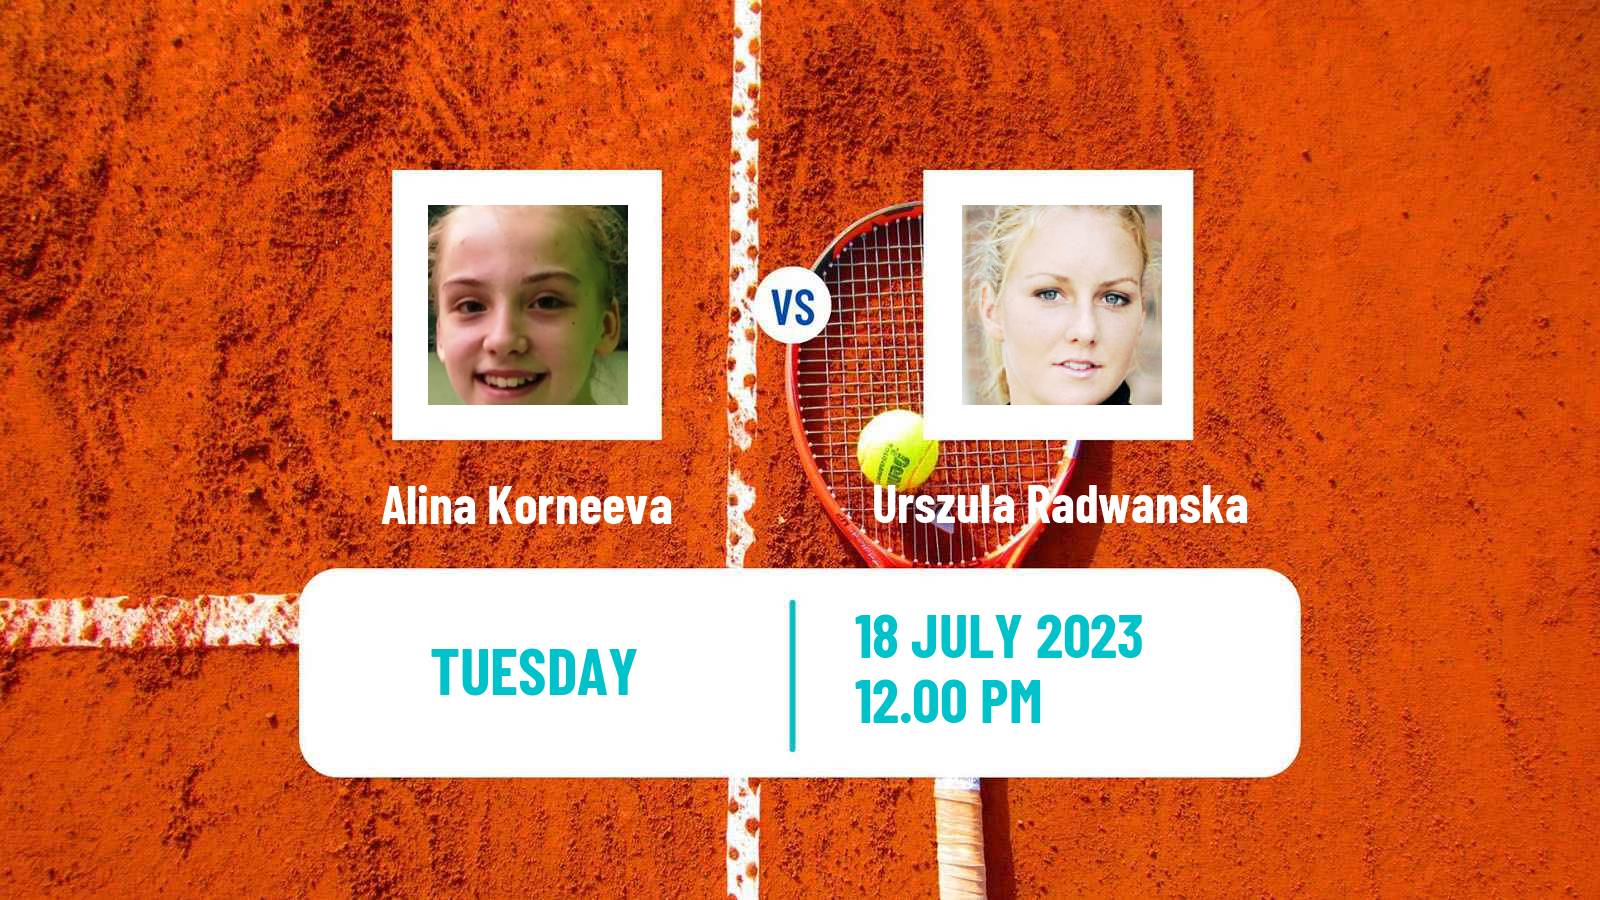 Tennis ITF W40 Porto 3 Women Alina Korneeva - Urszula Radwanska